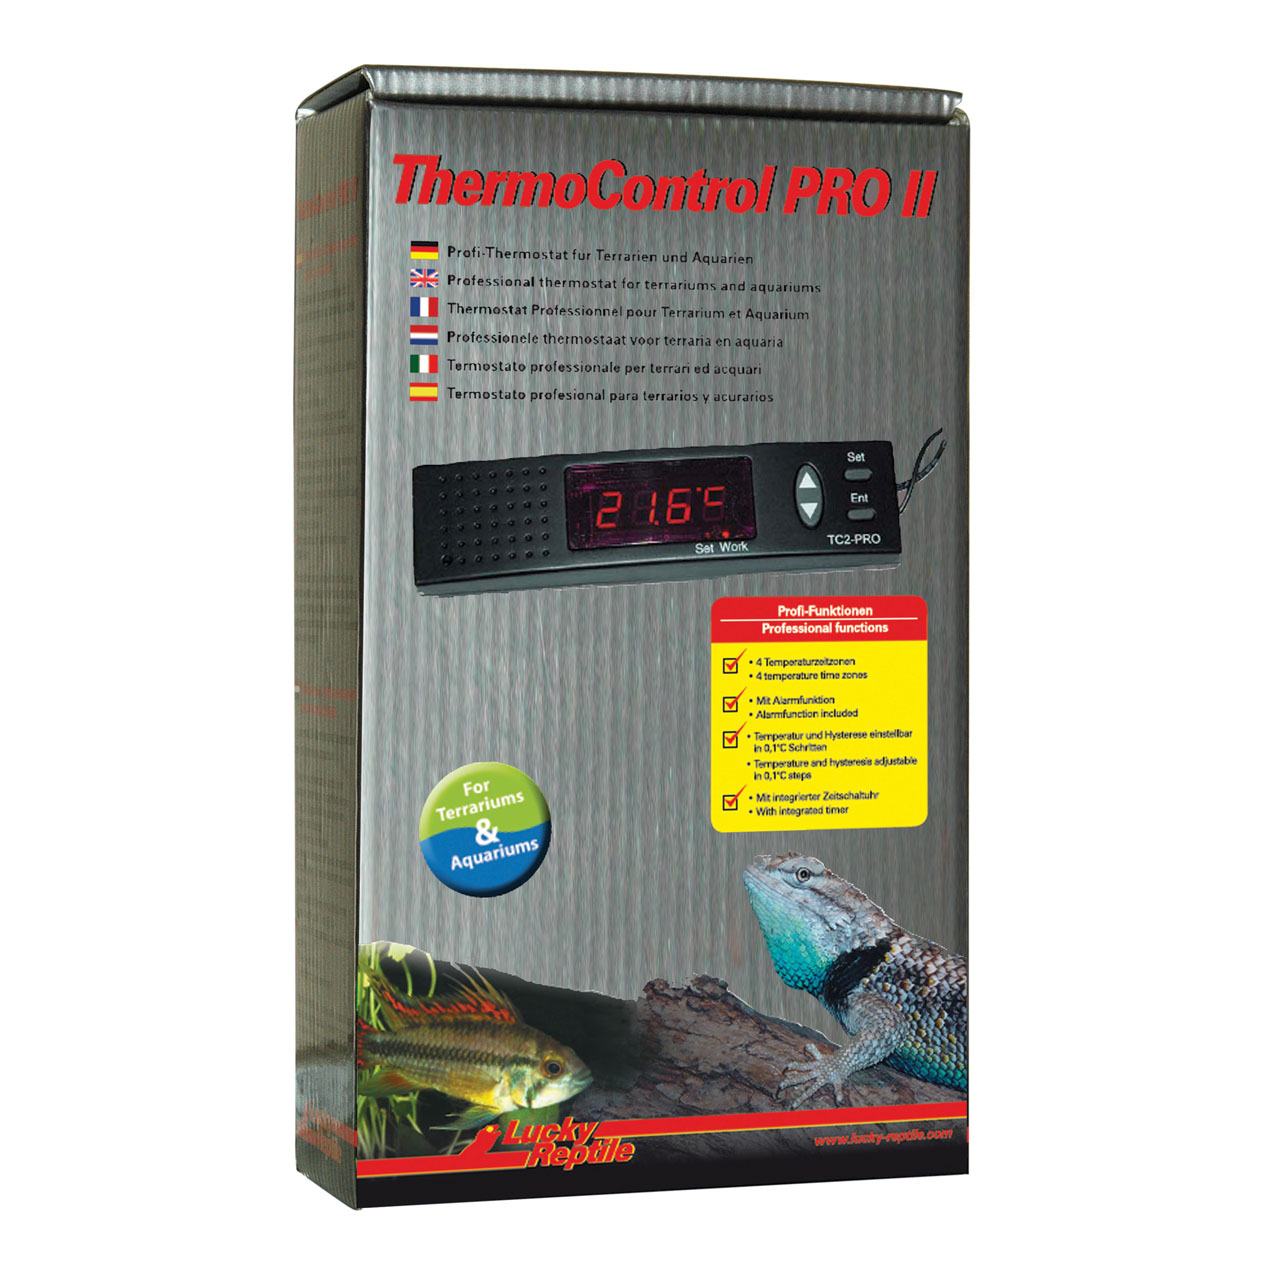 Lucky Reptile Thermo Control PRO II, Thermostate, Hygrostate & andere  Regler, Mess- und Regeltechnik, Produkte